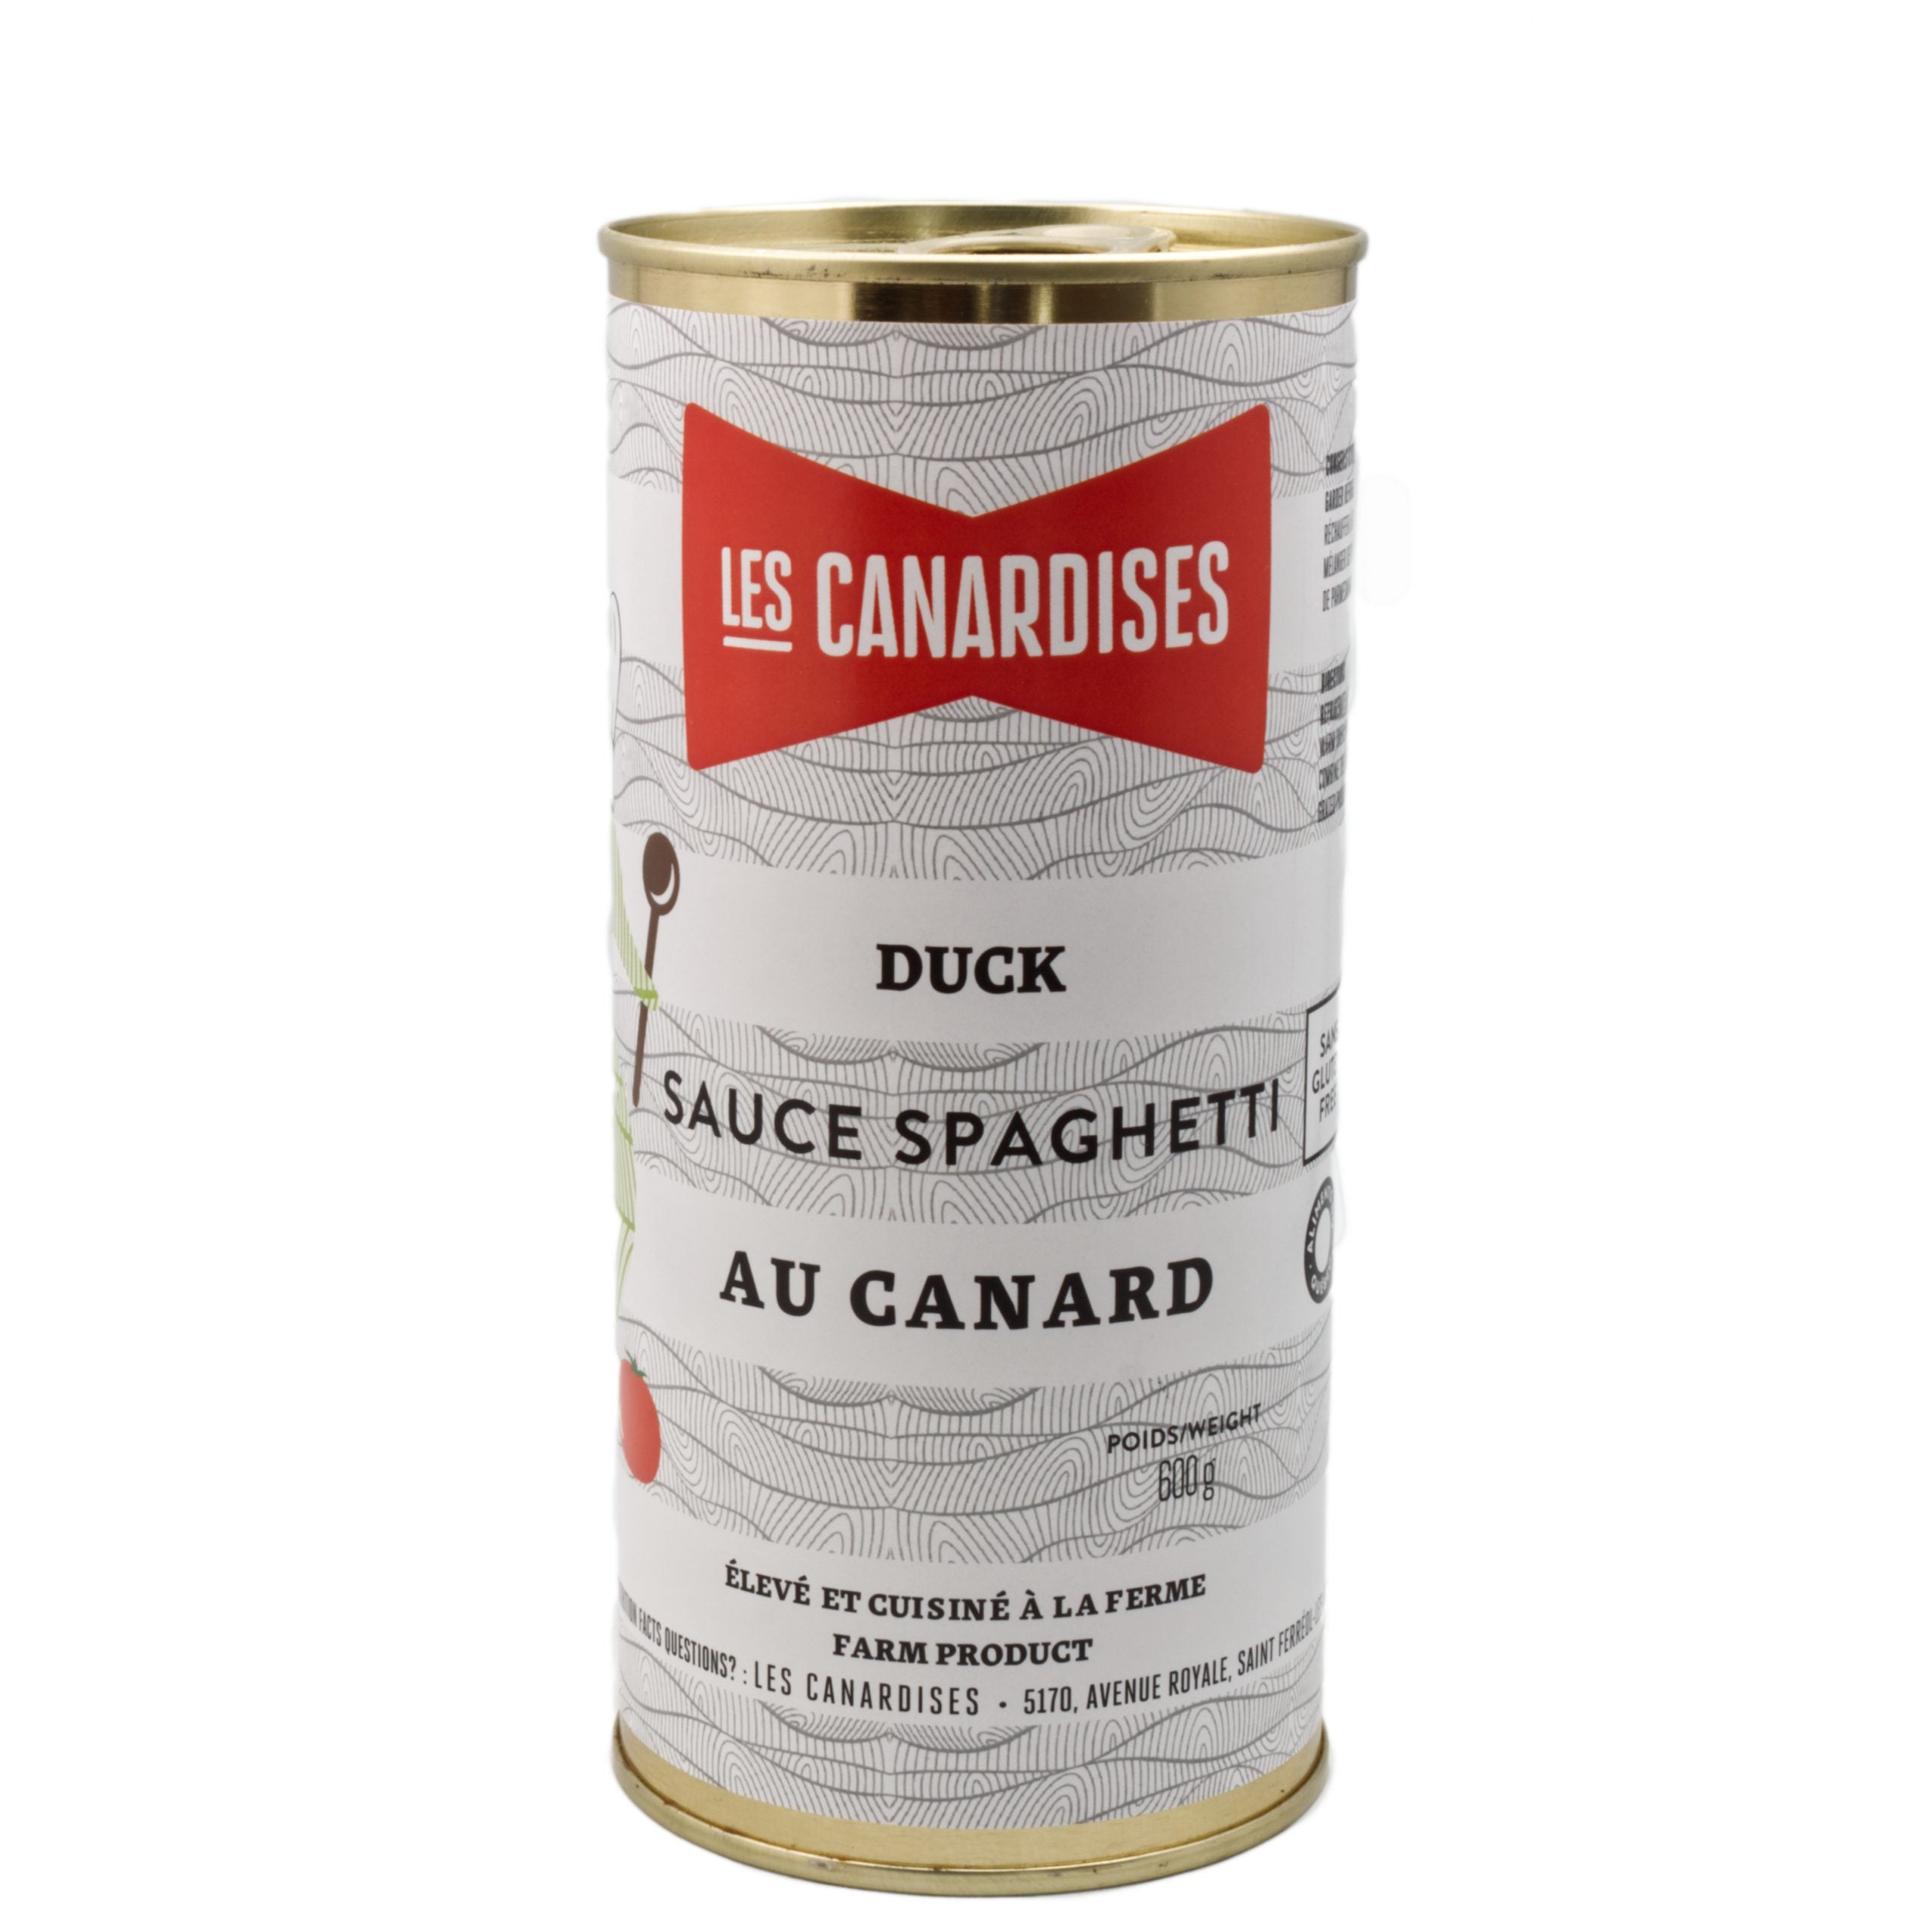 SAUCE SPAGHETTI au canard - 600g    - Les Canardises - Pâté - 